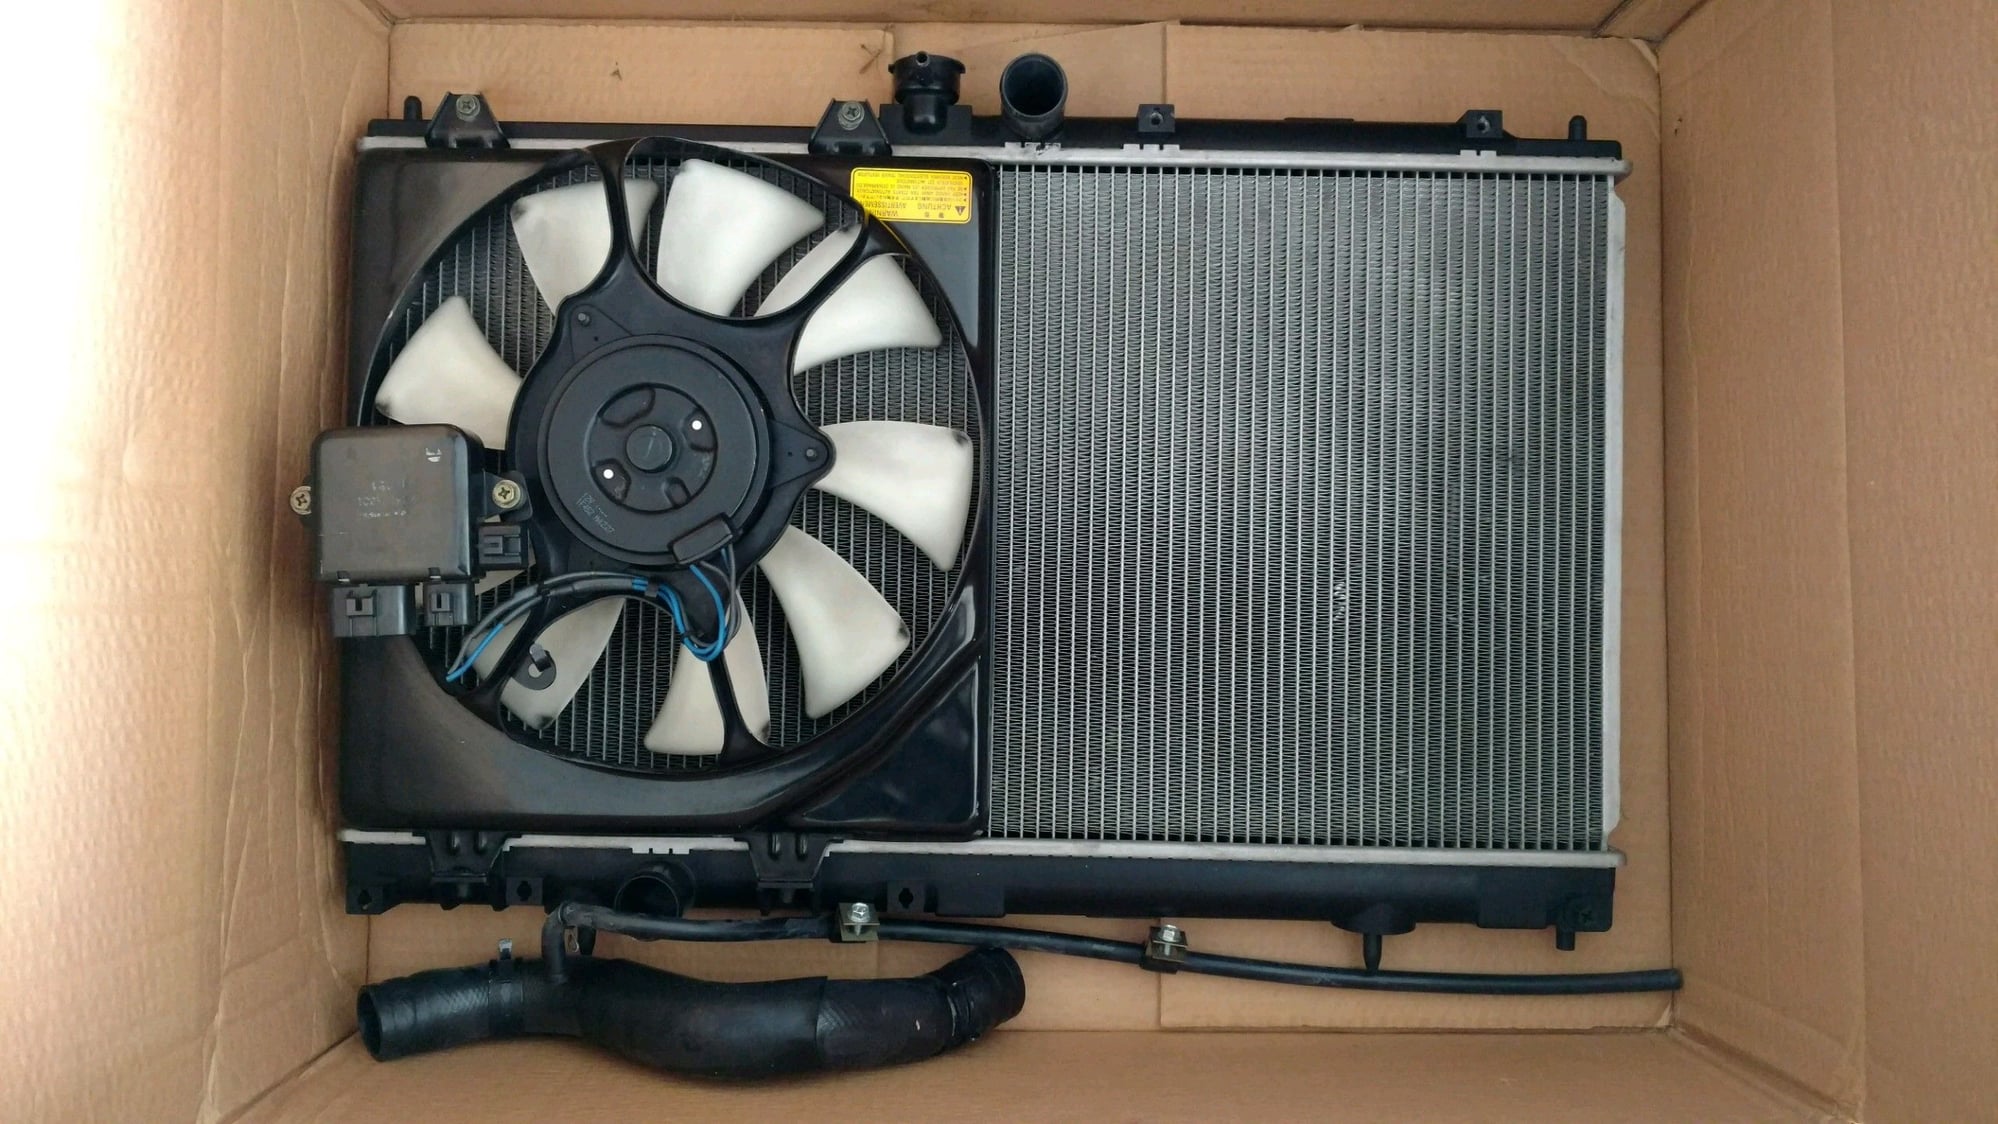 Miscellaneous - OEM Evo 8/9 radiator - Used - 2003 to 2005 Mitsubishi Lancer Evolution - Temecula, CA 92592, United States